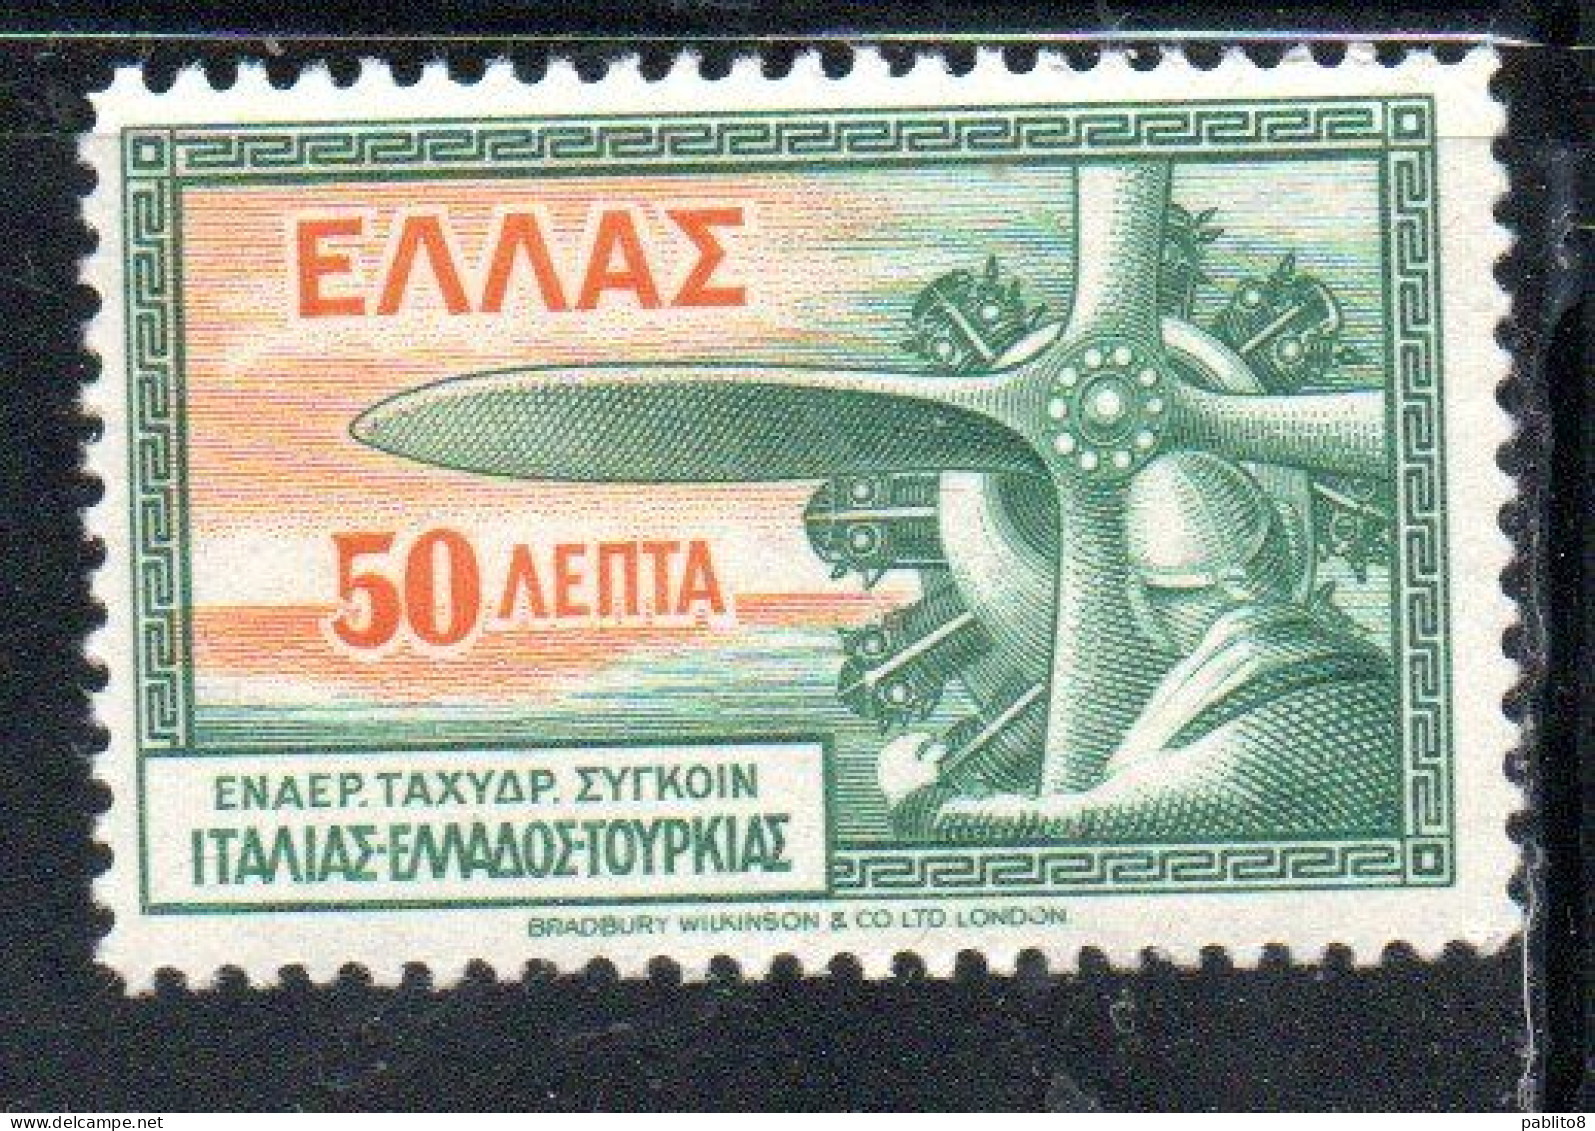 GREECE GRECIA ELLAS 1933 AIR POST MAIL AIRMAIL PROPELLER AND PILOT'S HEAD 50l MNH - Ungebraucht